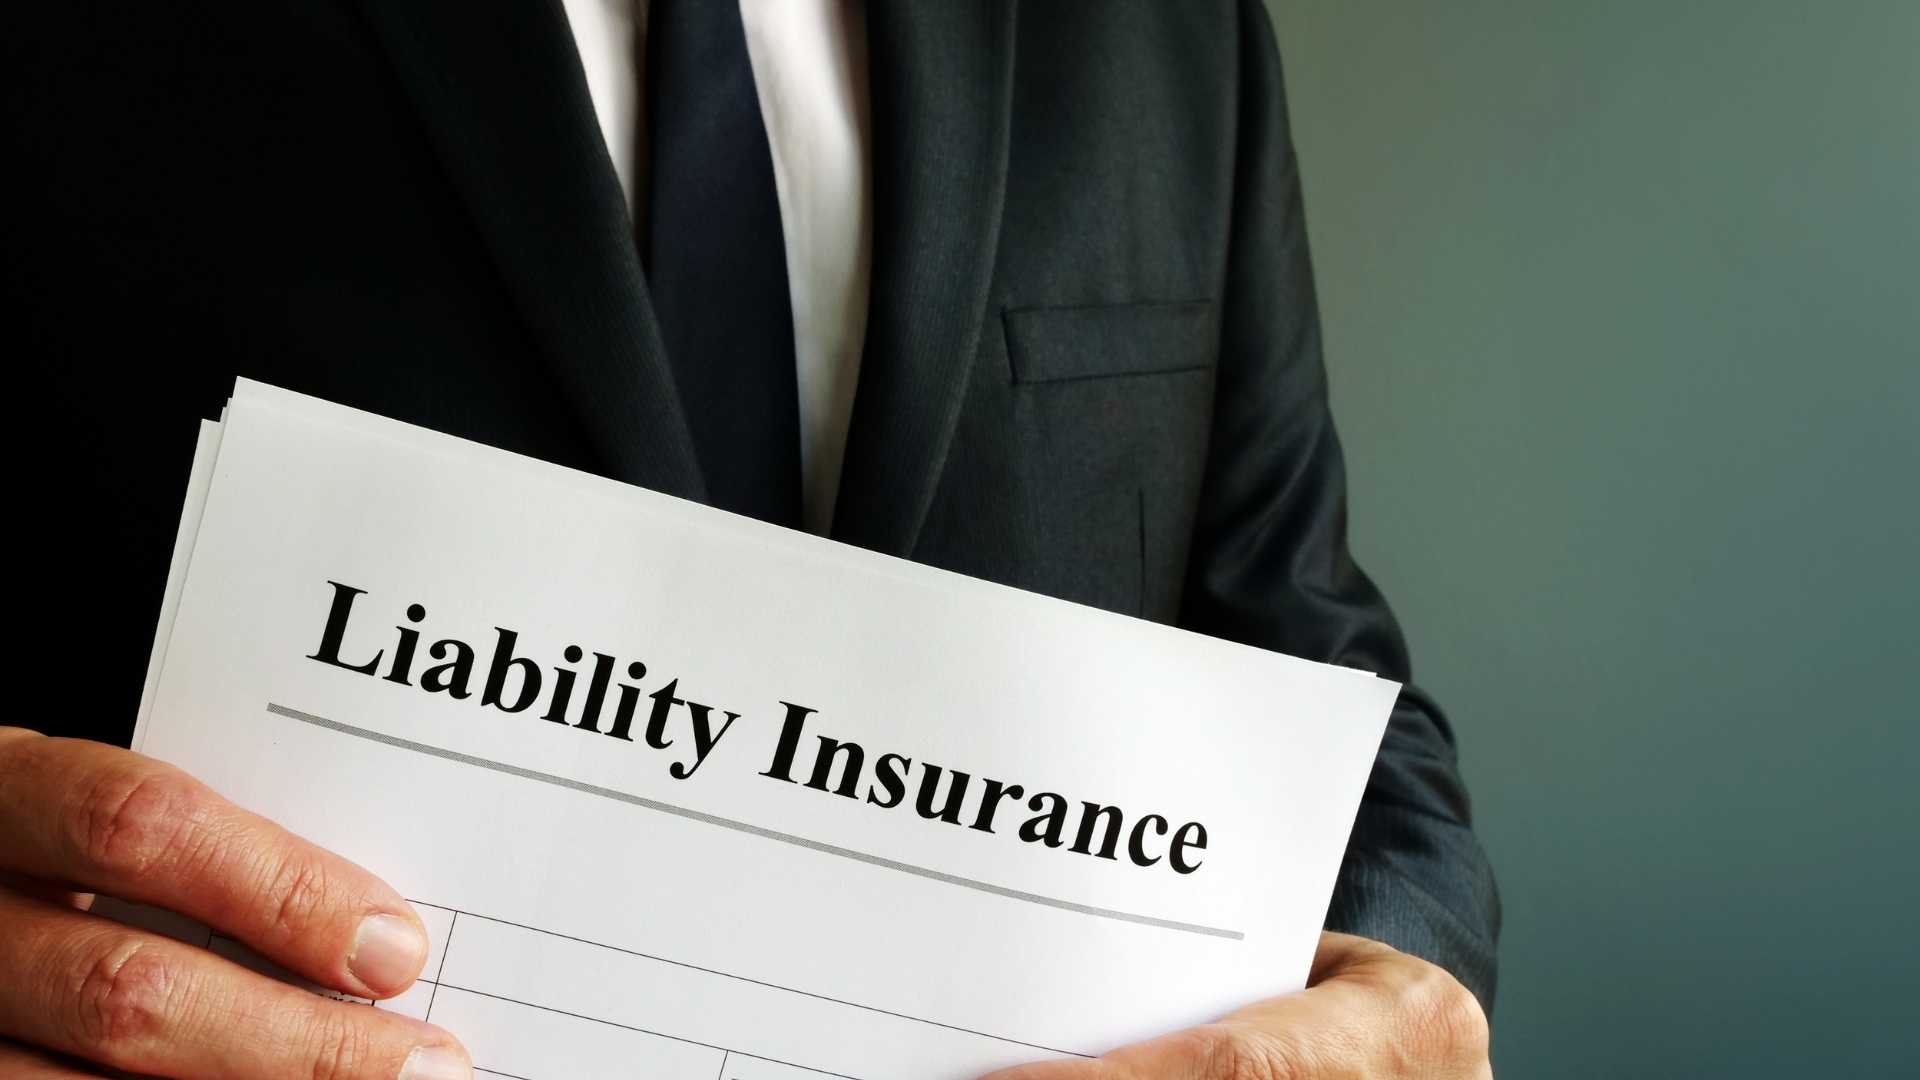 Business liabilities insurance